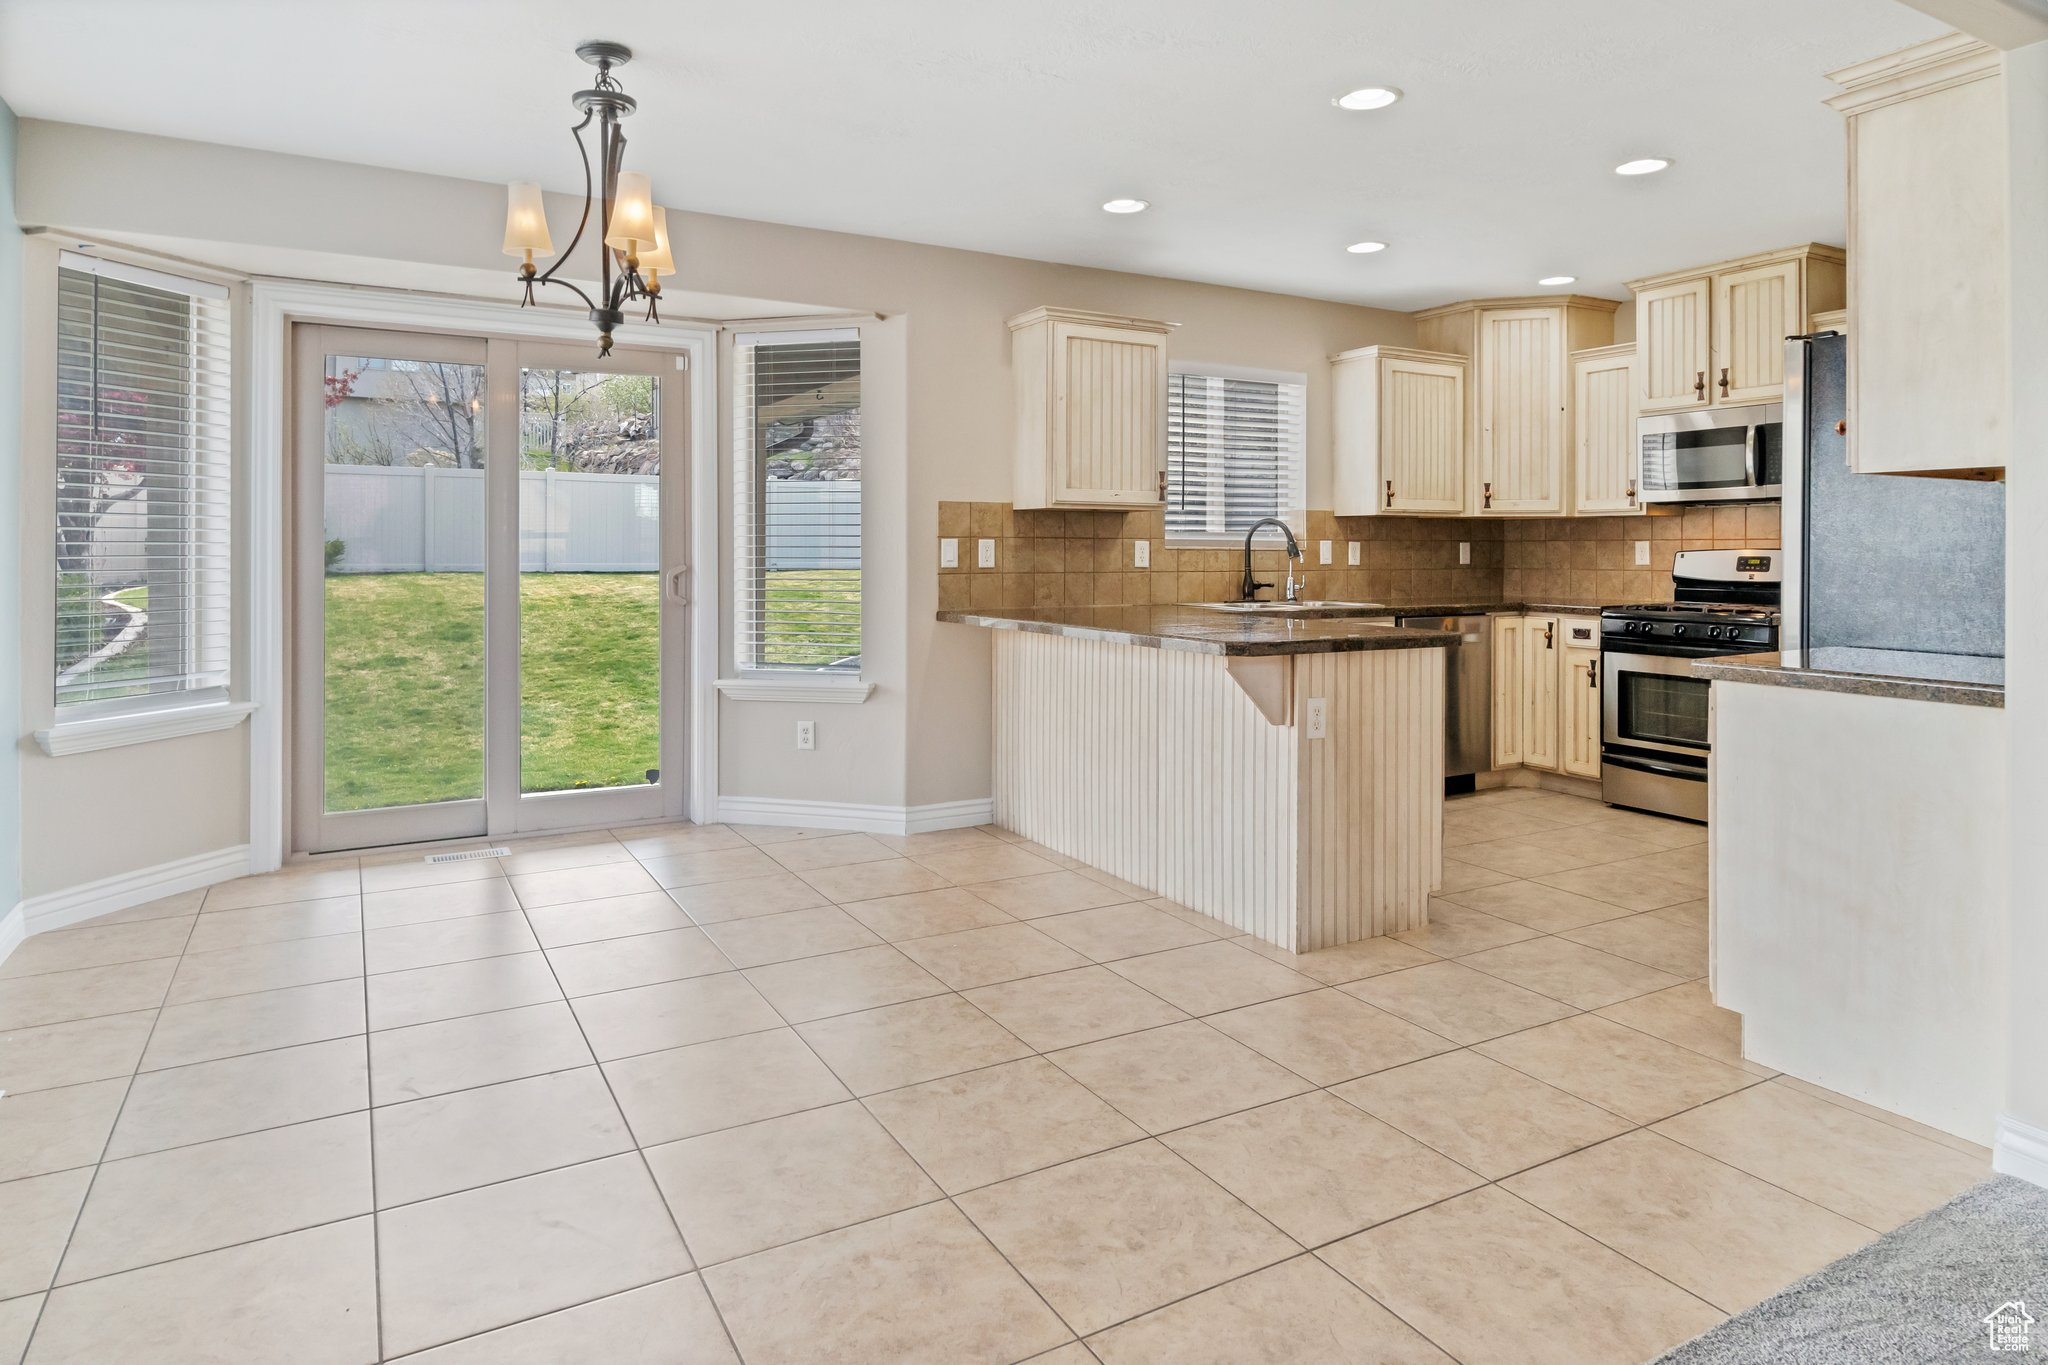 Kitchen featuring kitchen peninsula, backsplash, stainless steel appliances, light tile flooring, and pendant lighting